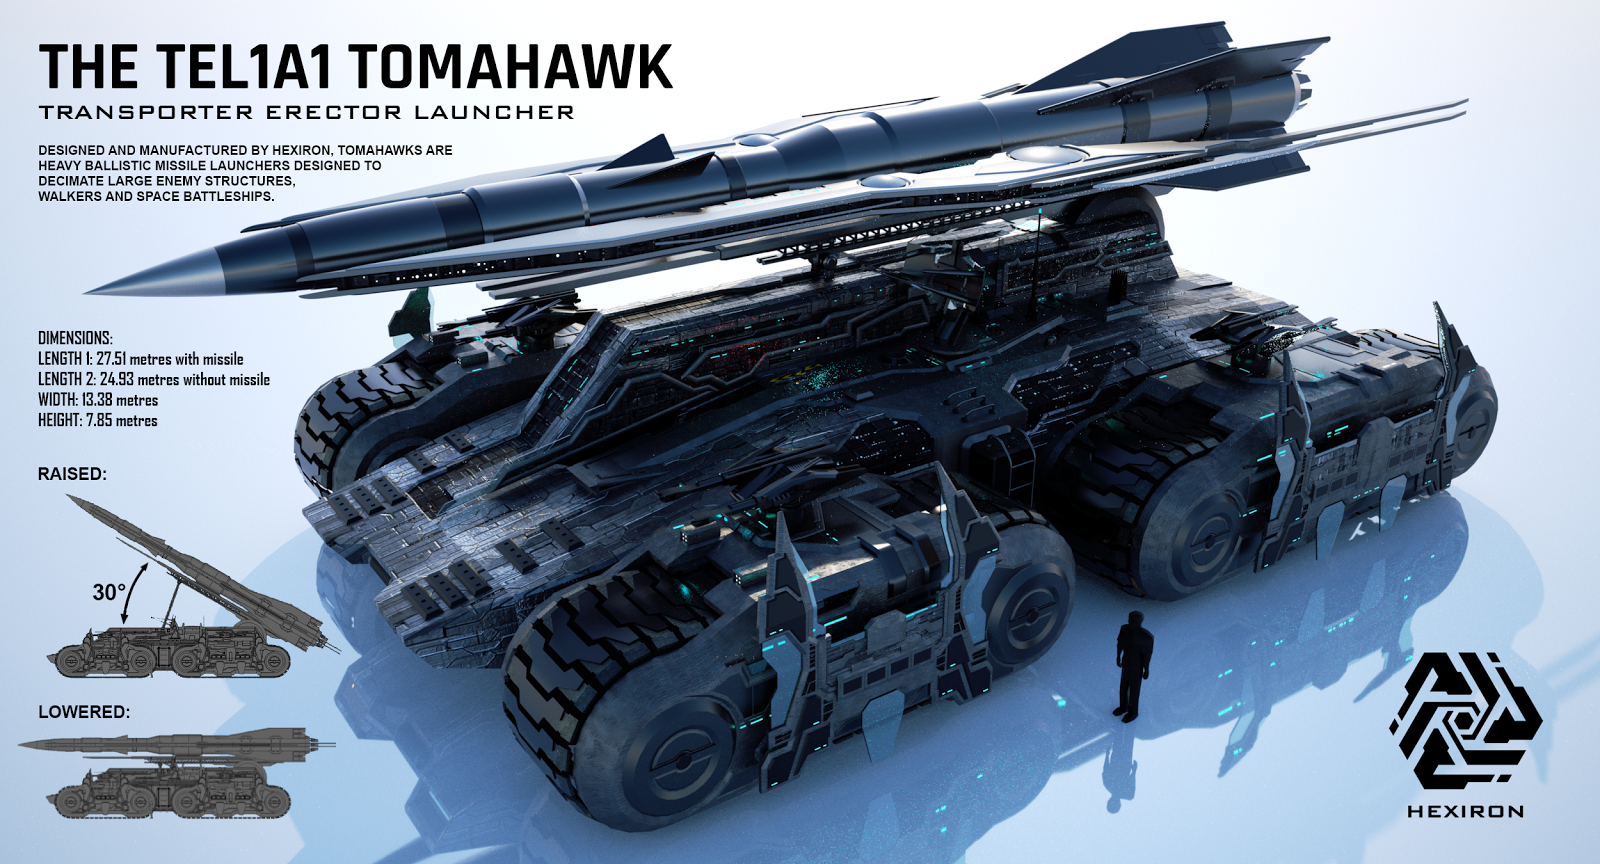 tel1a1_tomahawk_transporter_erector_launcher_by_duskie_06-dajm0p9.png